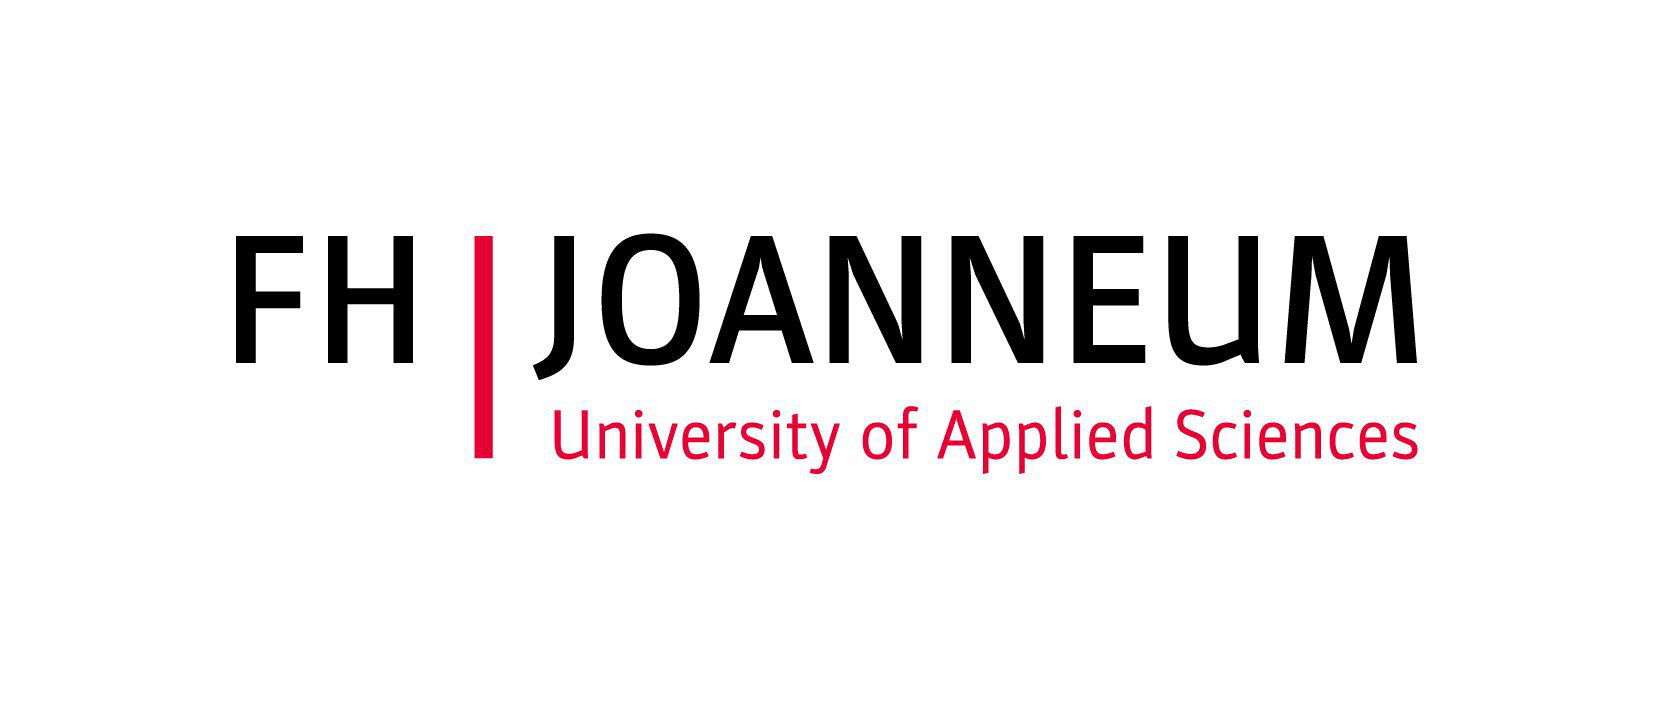 University of Applied Sciences (FH) Joanneum